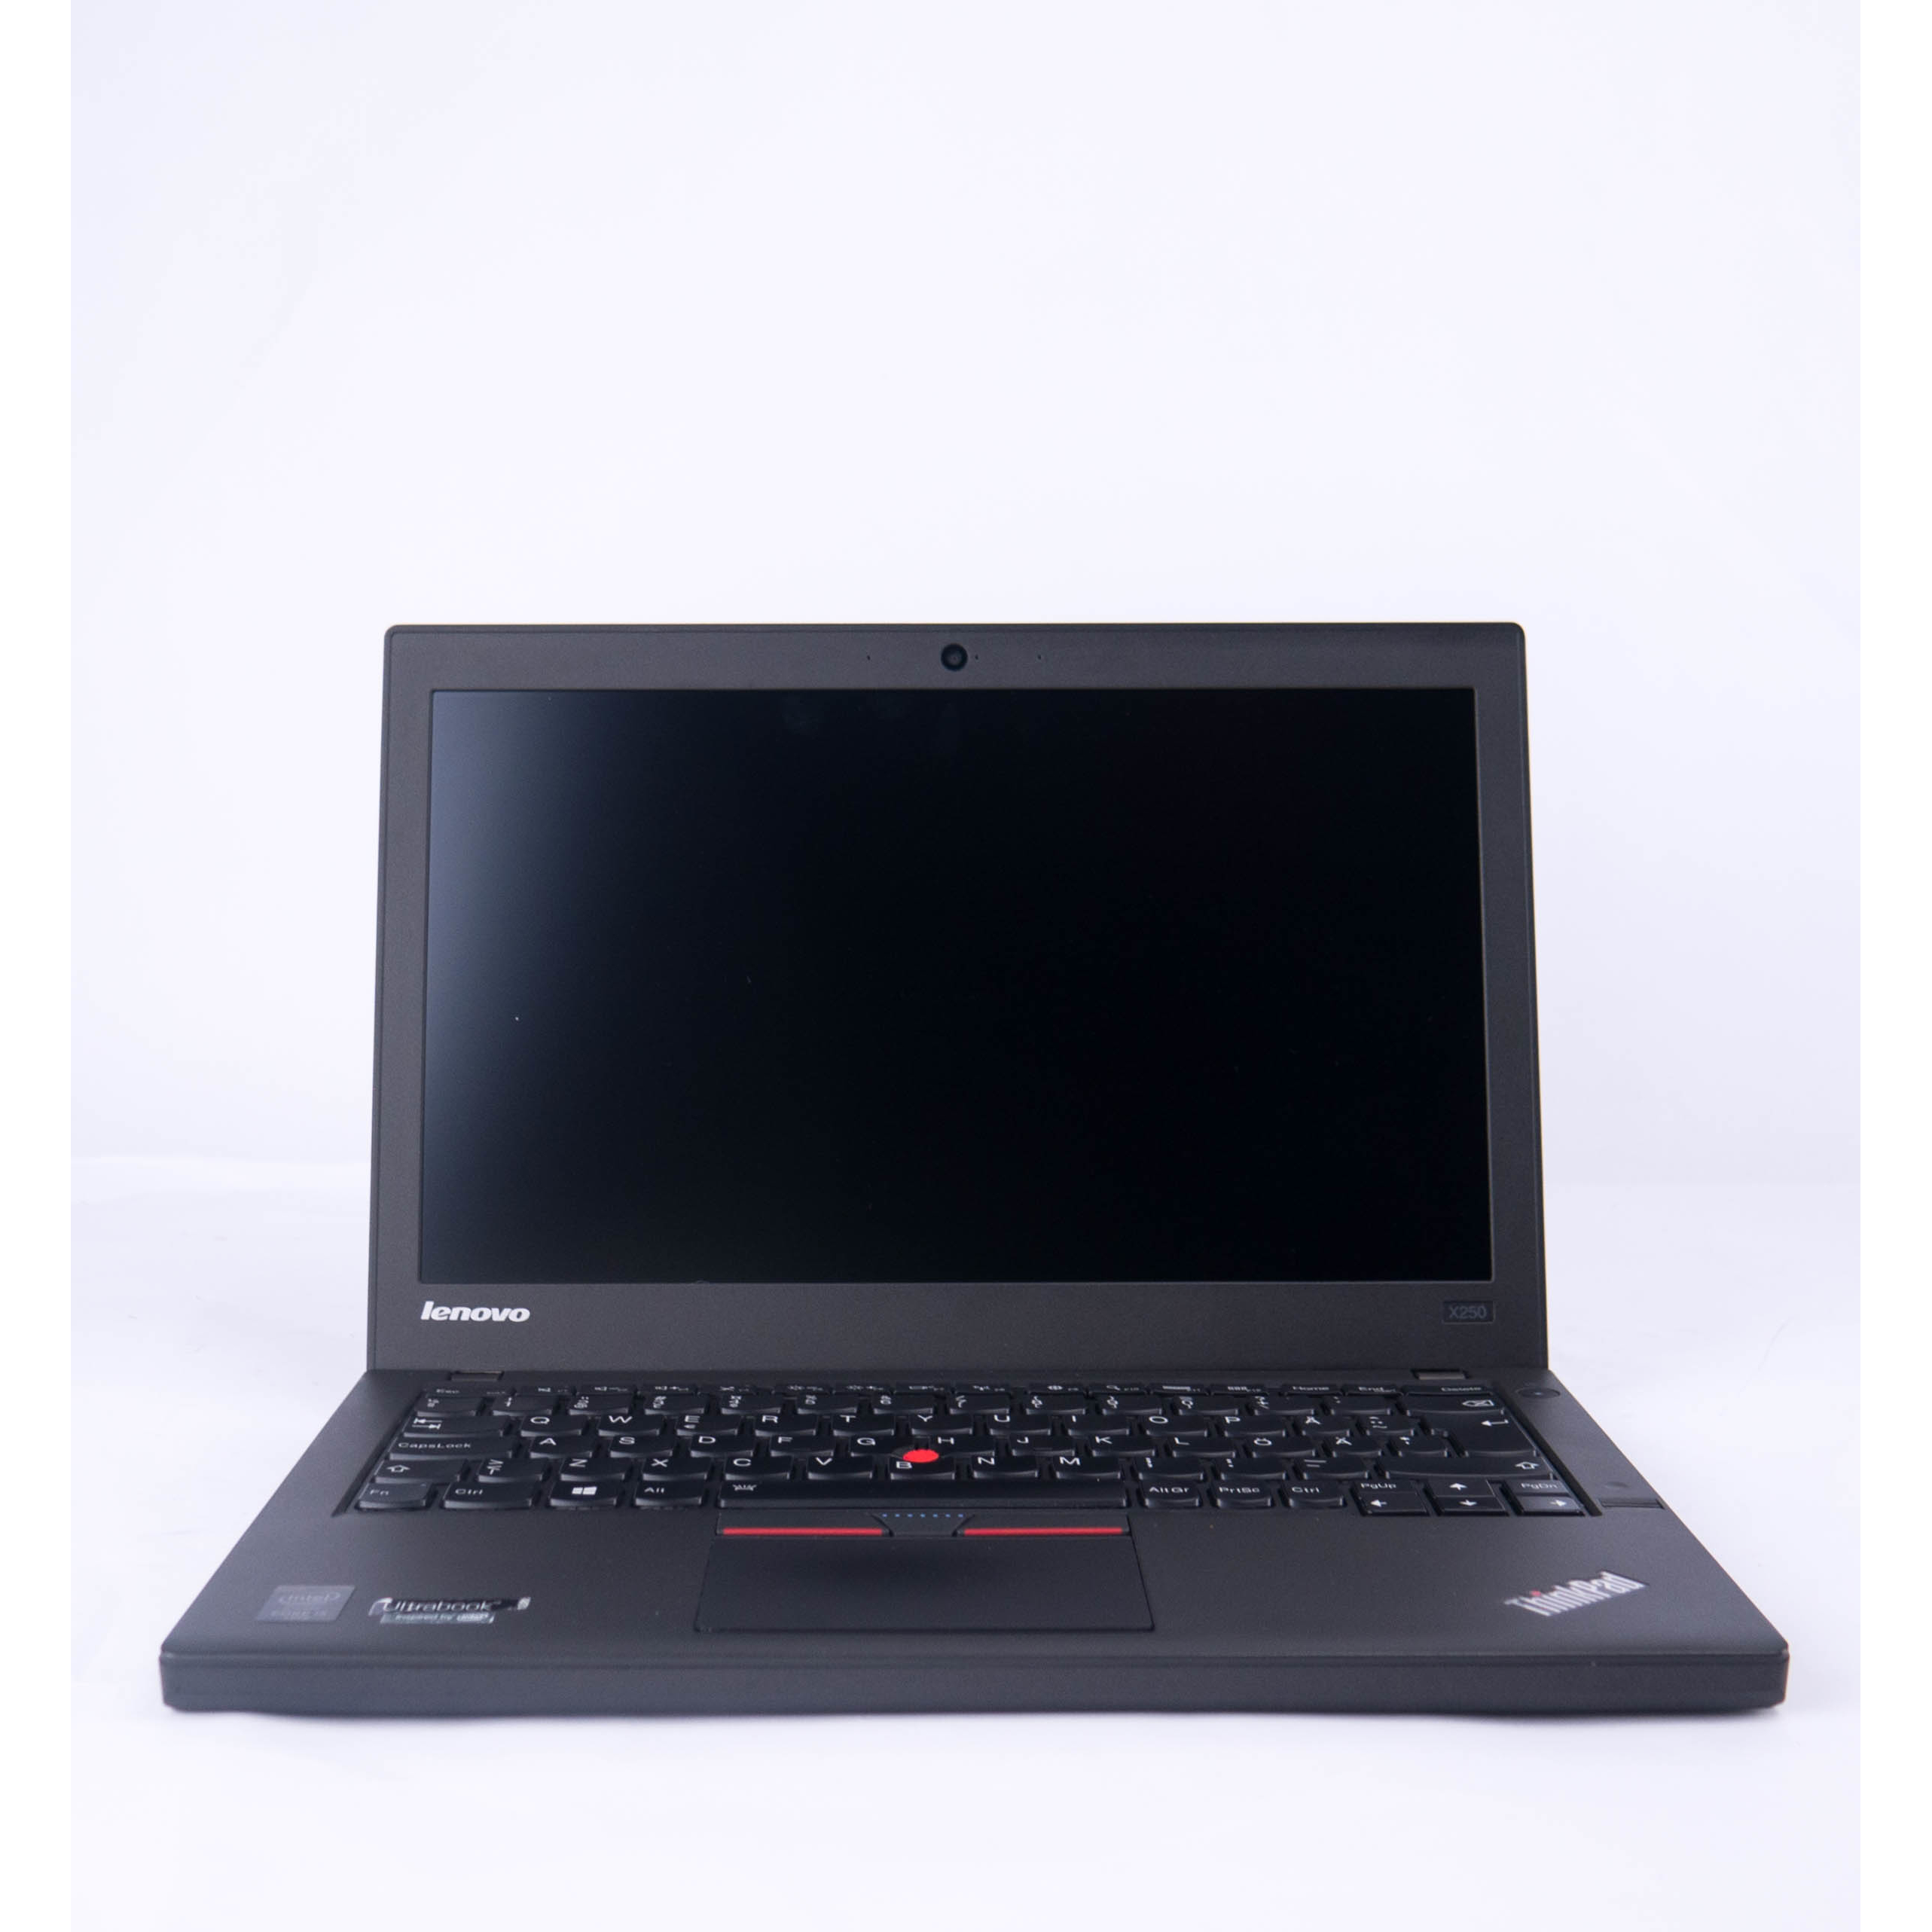 Lenovo ThinkPad X250 Клас A-| Лаптопи втора ръка | iZone